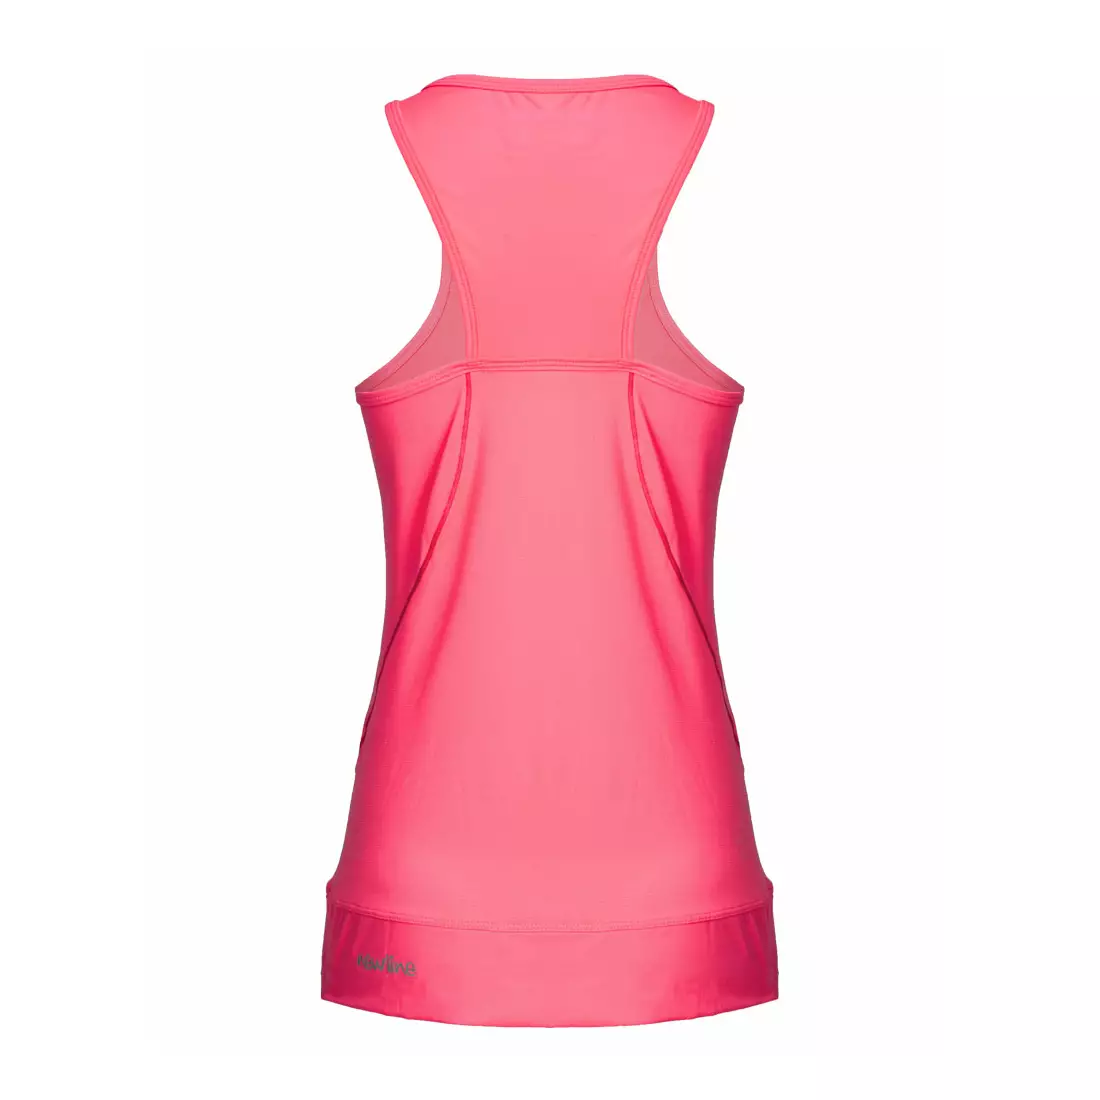 NEWLINE IMOTION TANK 10793-274 - tricou b/r alergare dama, culoare: roz fluor